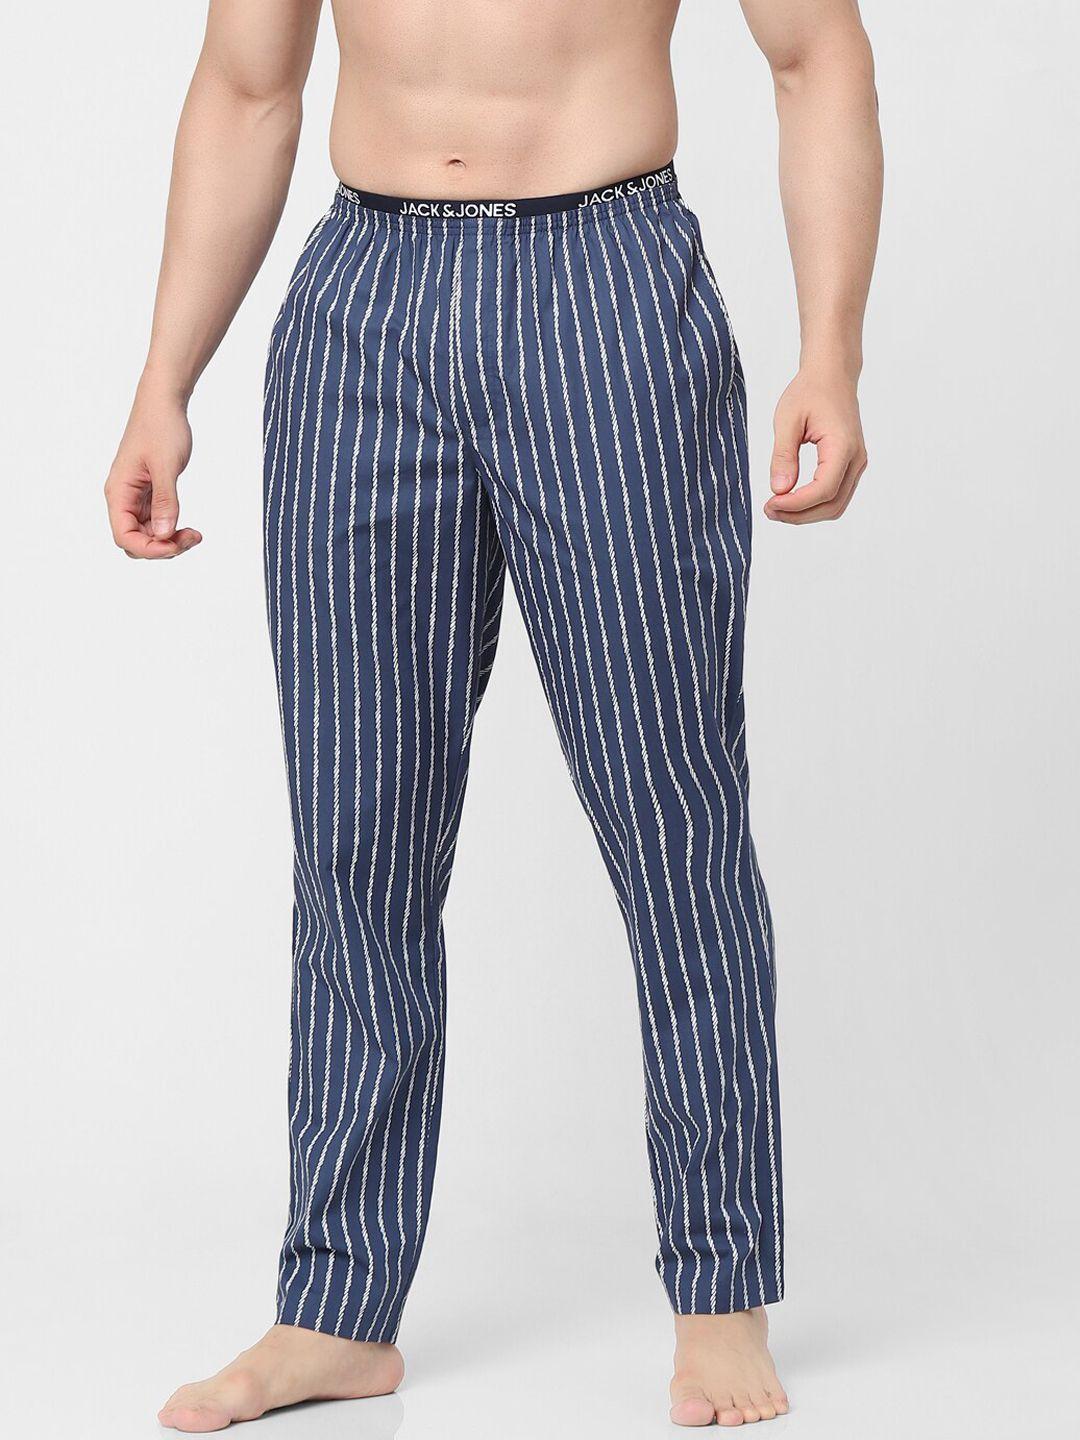 jack & jones men blue striped cotton lounge pants